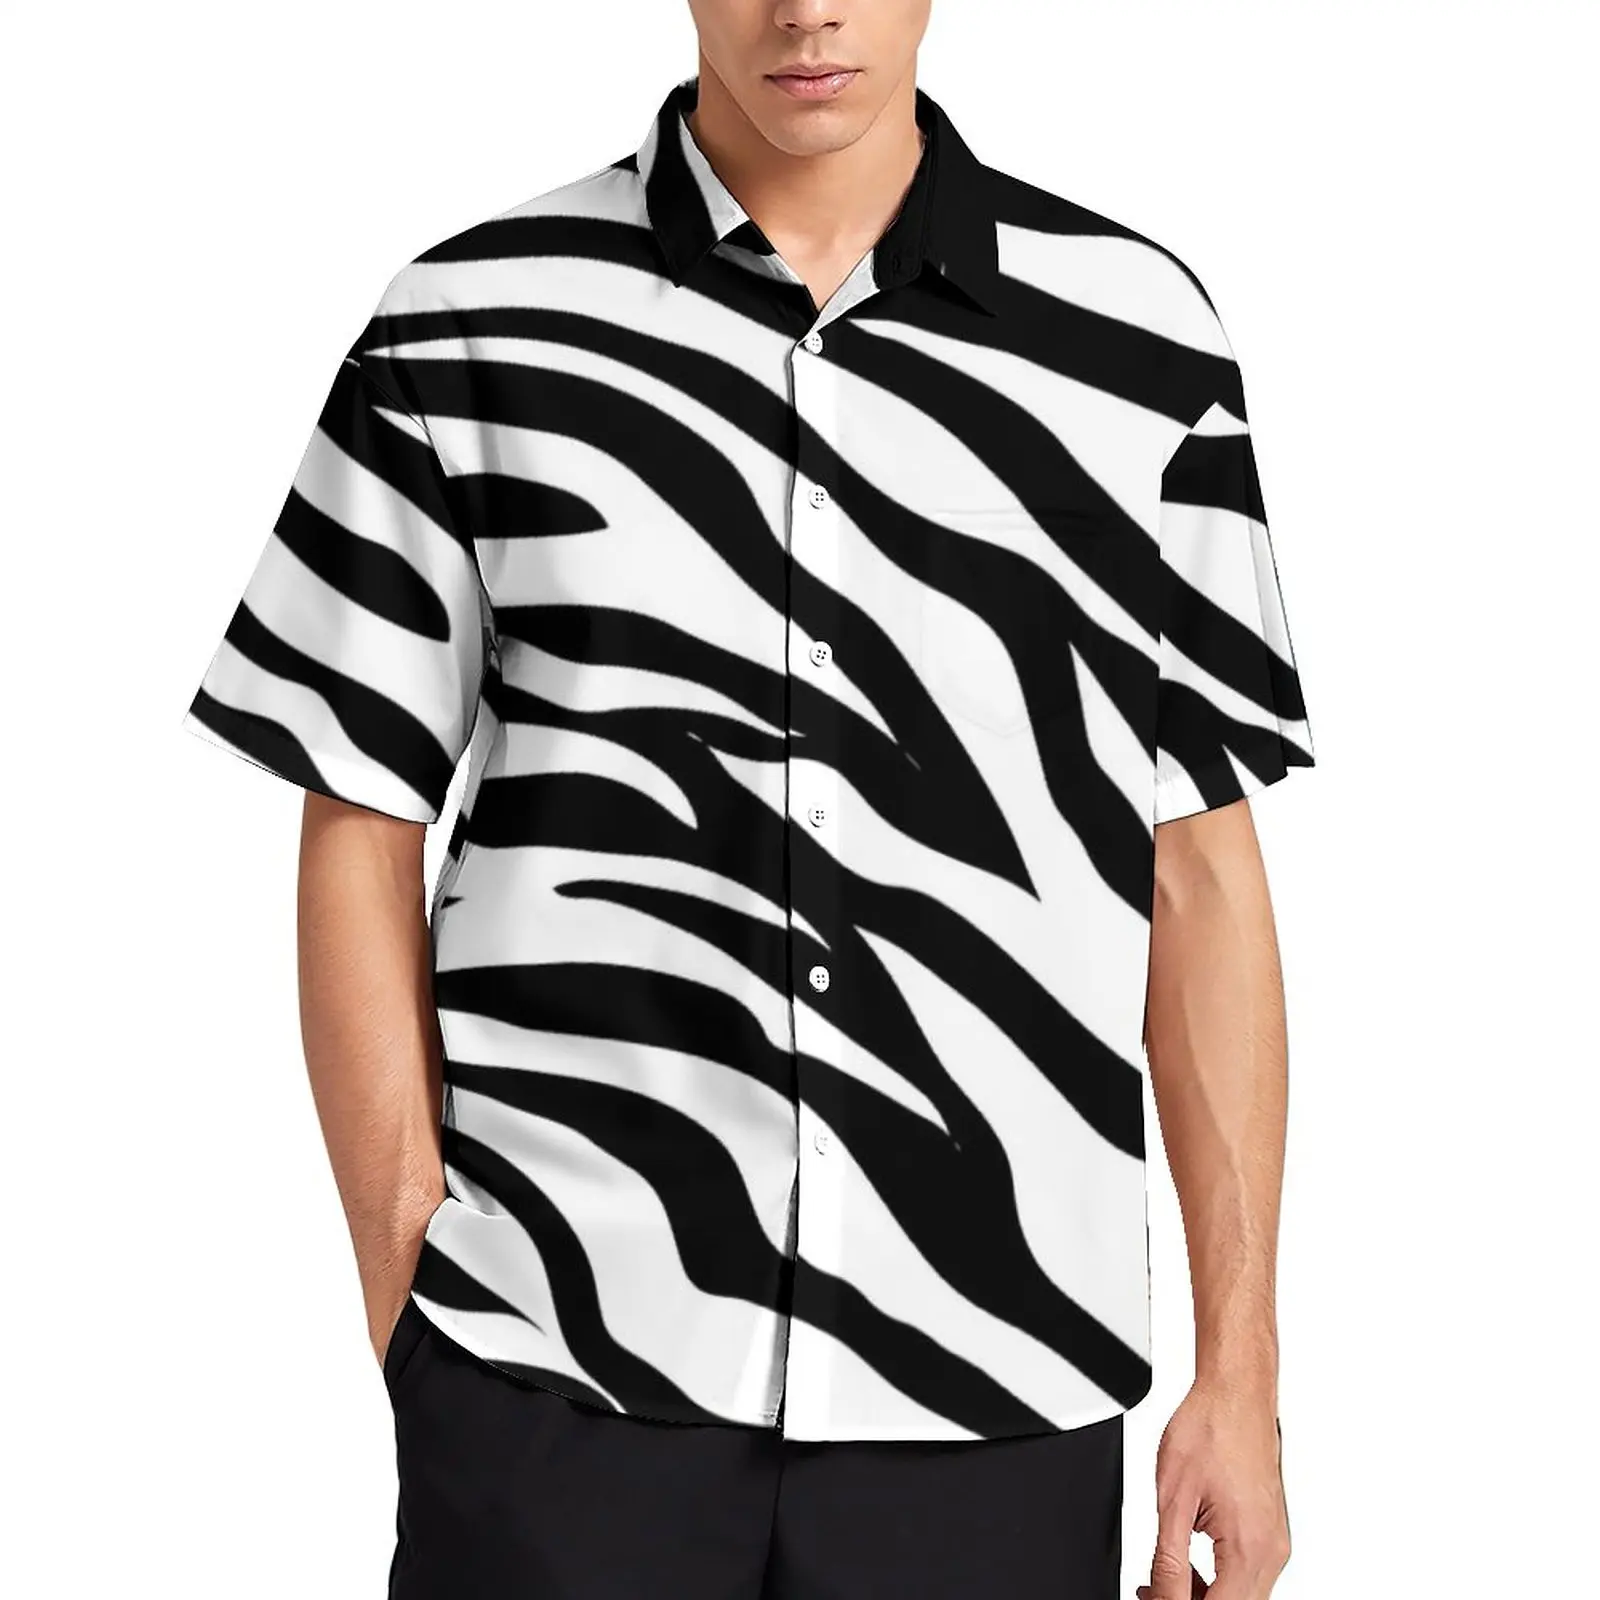 

Zebra Design Vacation Shirt Black And White Stripes Hawaii Casual Shirts Fashion Blouses Short Sleeve Custom Clothes Plus Size